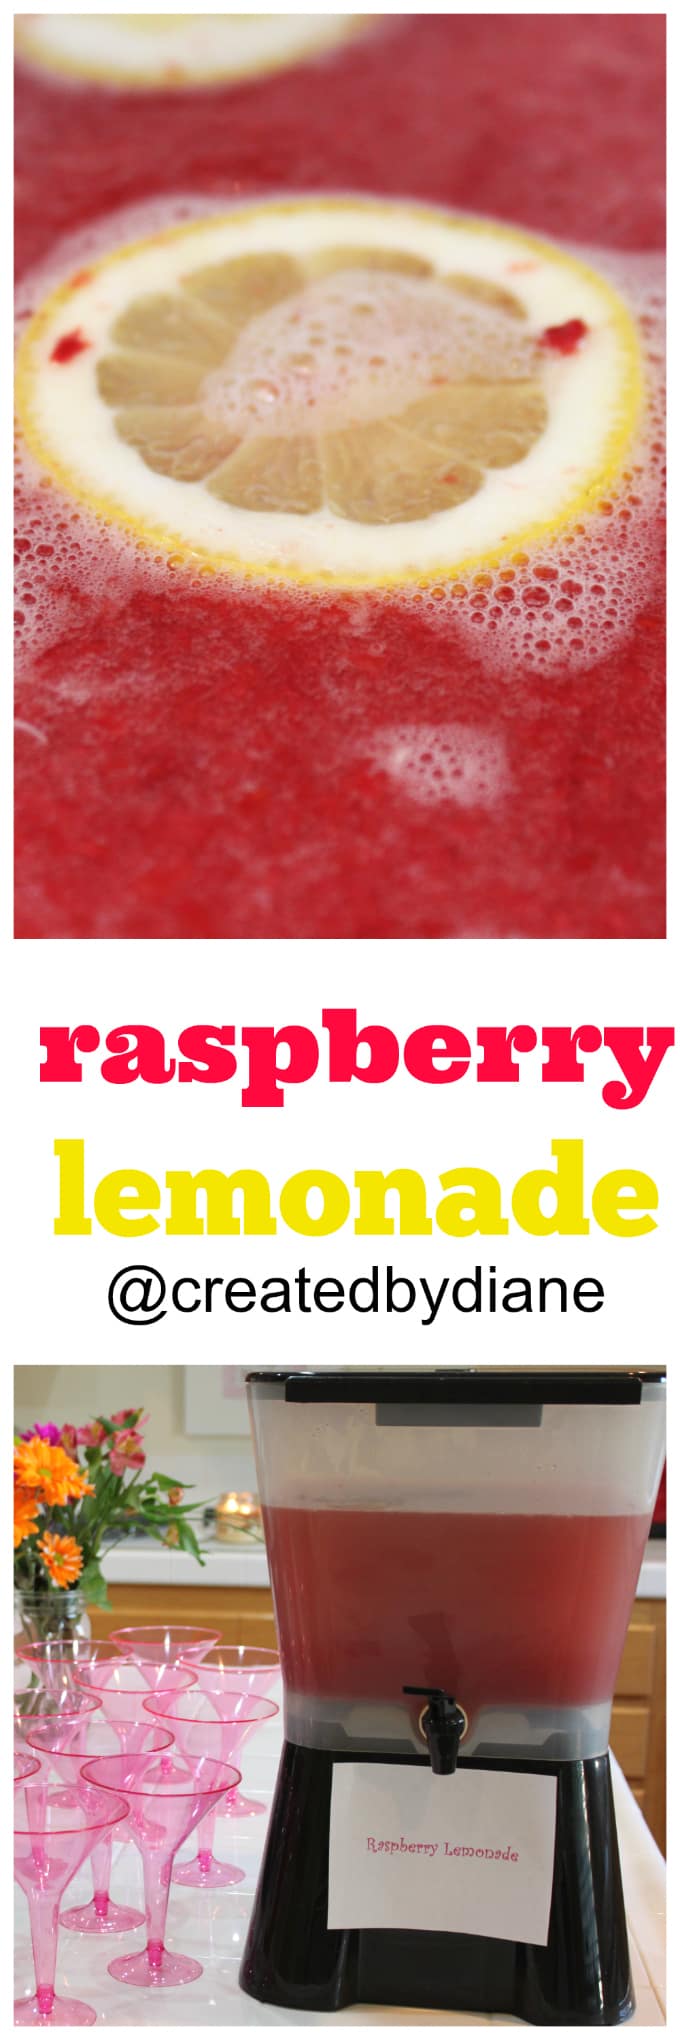 raspberry lemonade recipe with real fruit